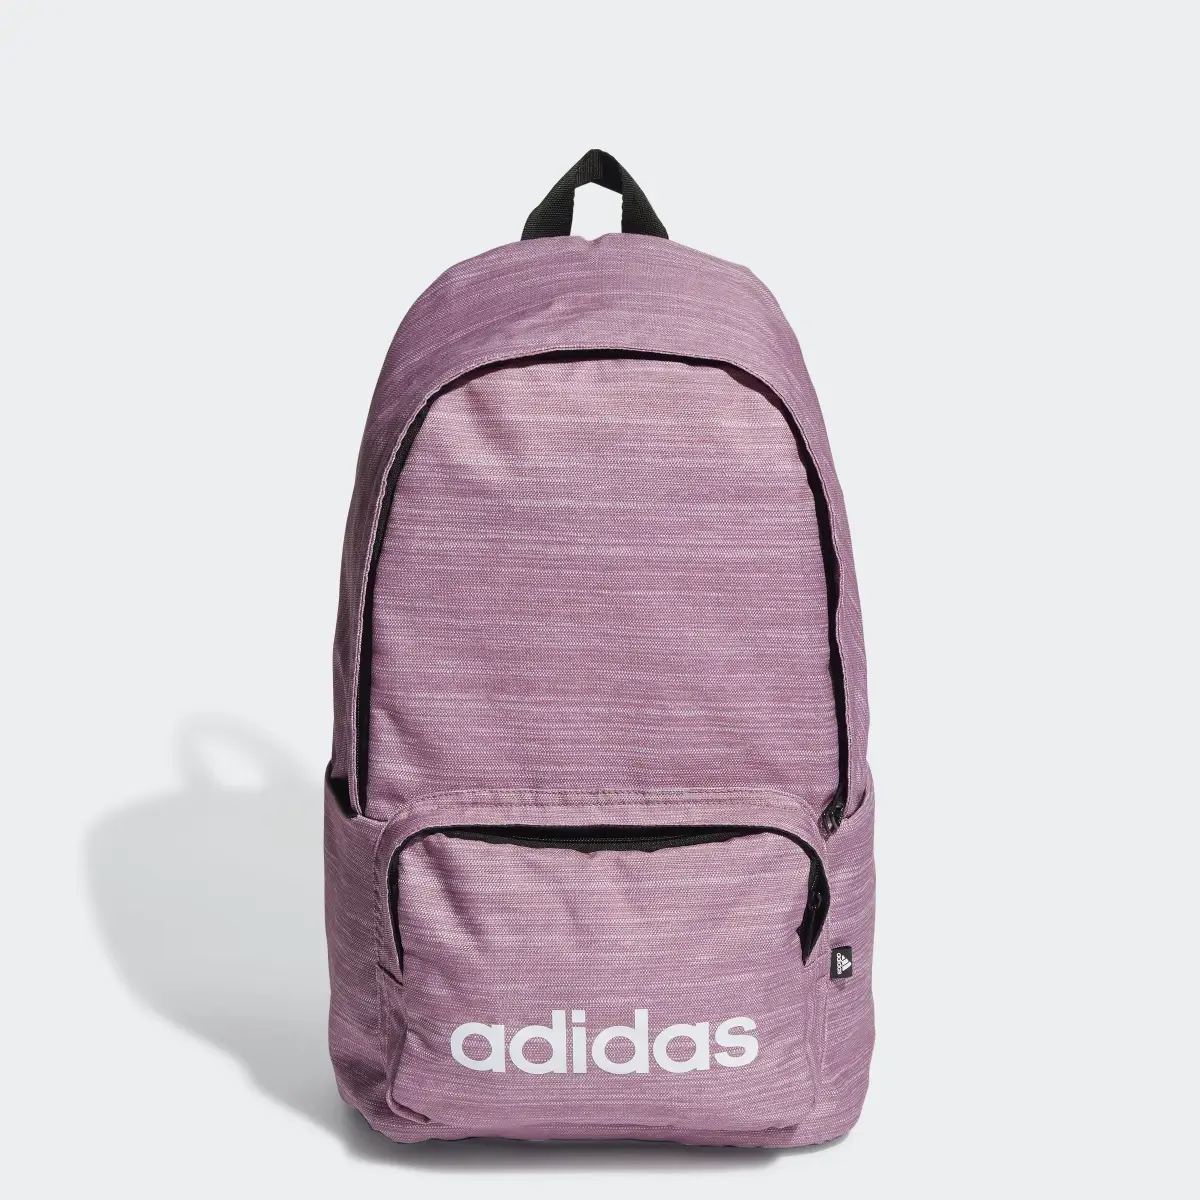 Adidas Classic Attitude Backpack. 1